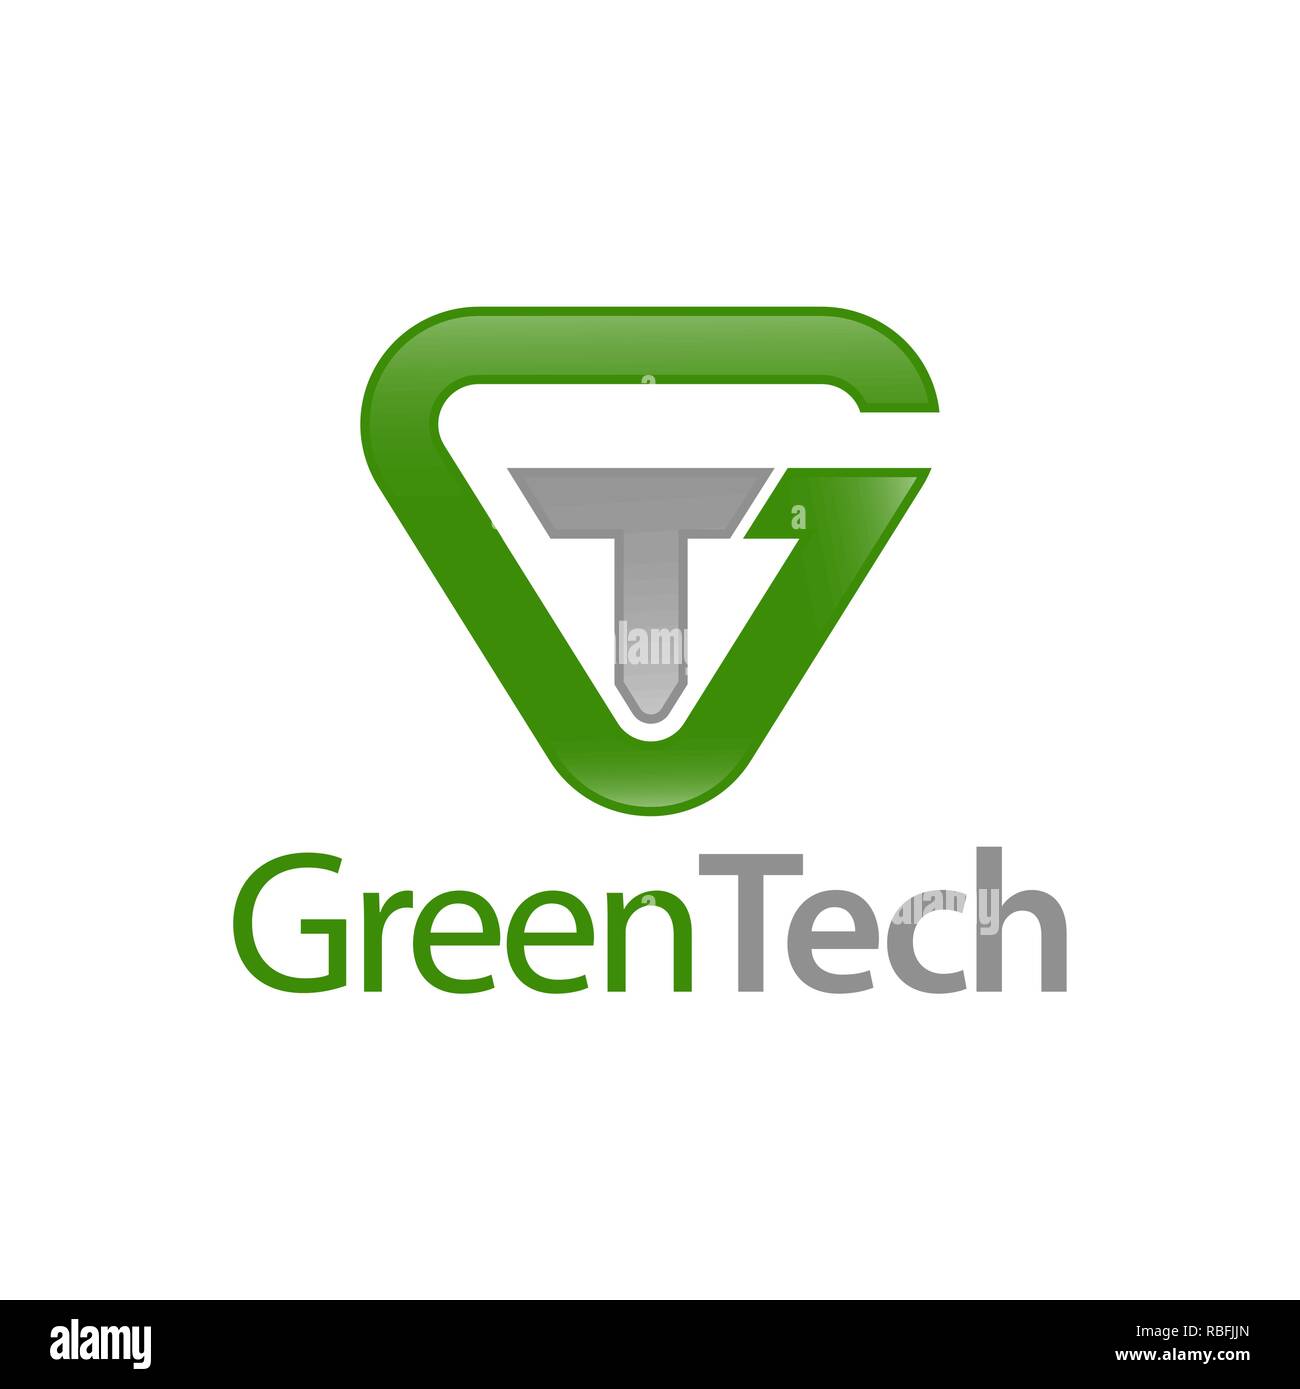 Green Tech. Dreieck initial GT, TG logo Konzept Design vorlage Idee Stock Vektor